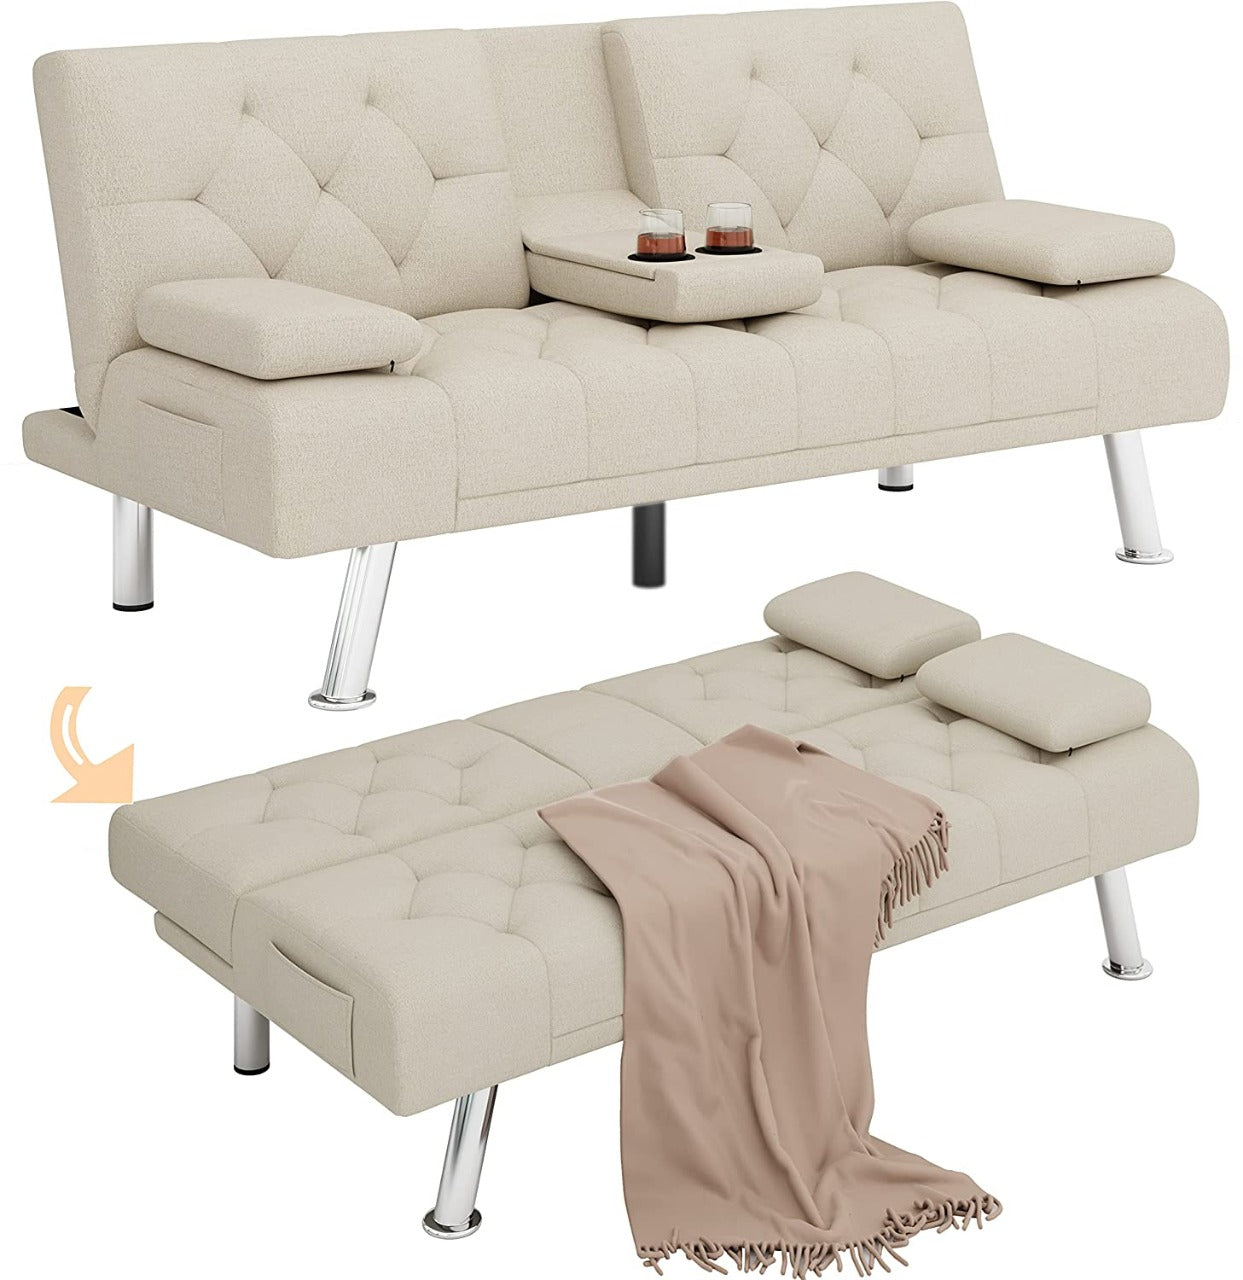 Sofa Cum Bed Designs, Sofa Come Bed Design With Price, Sofa Come Bed Design